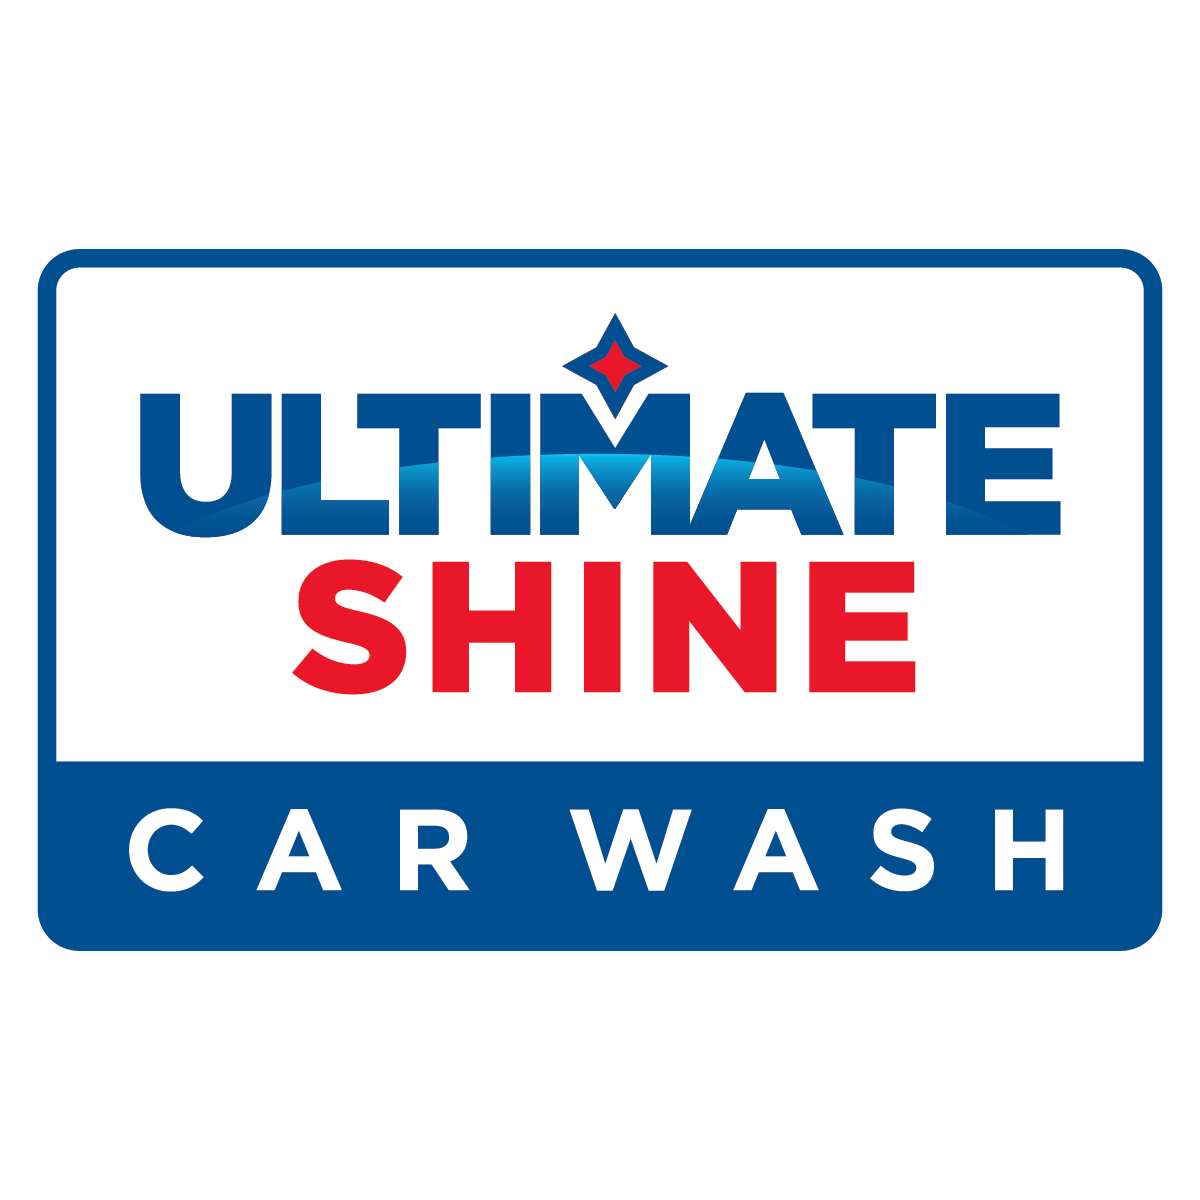 Ultimate Shine Car Wash - Coming Soon